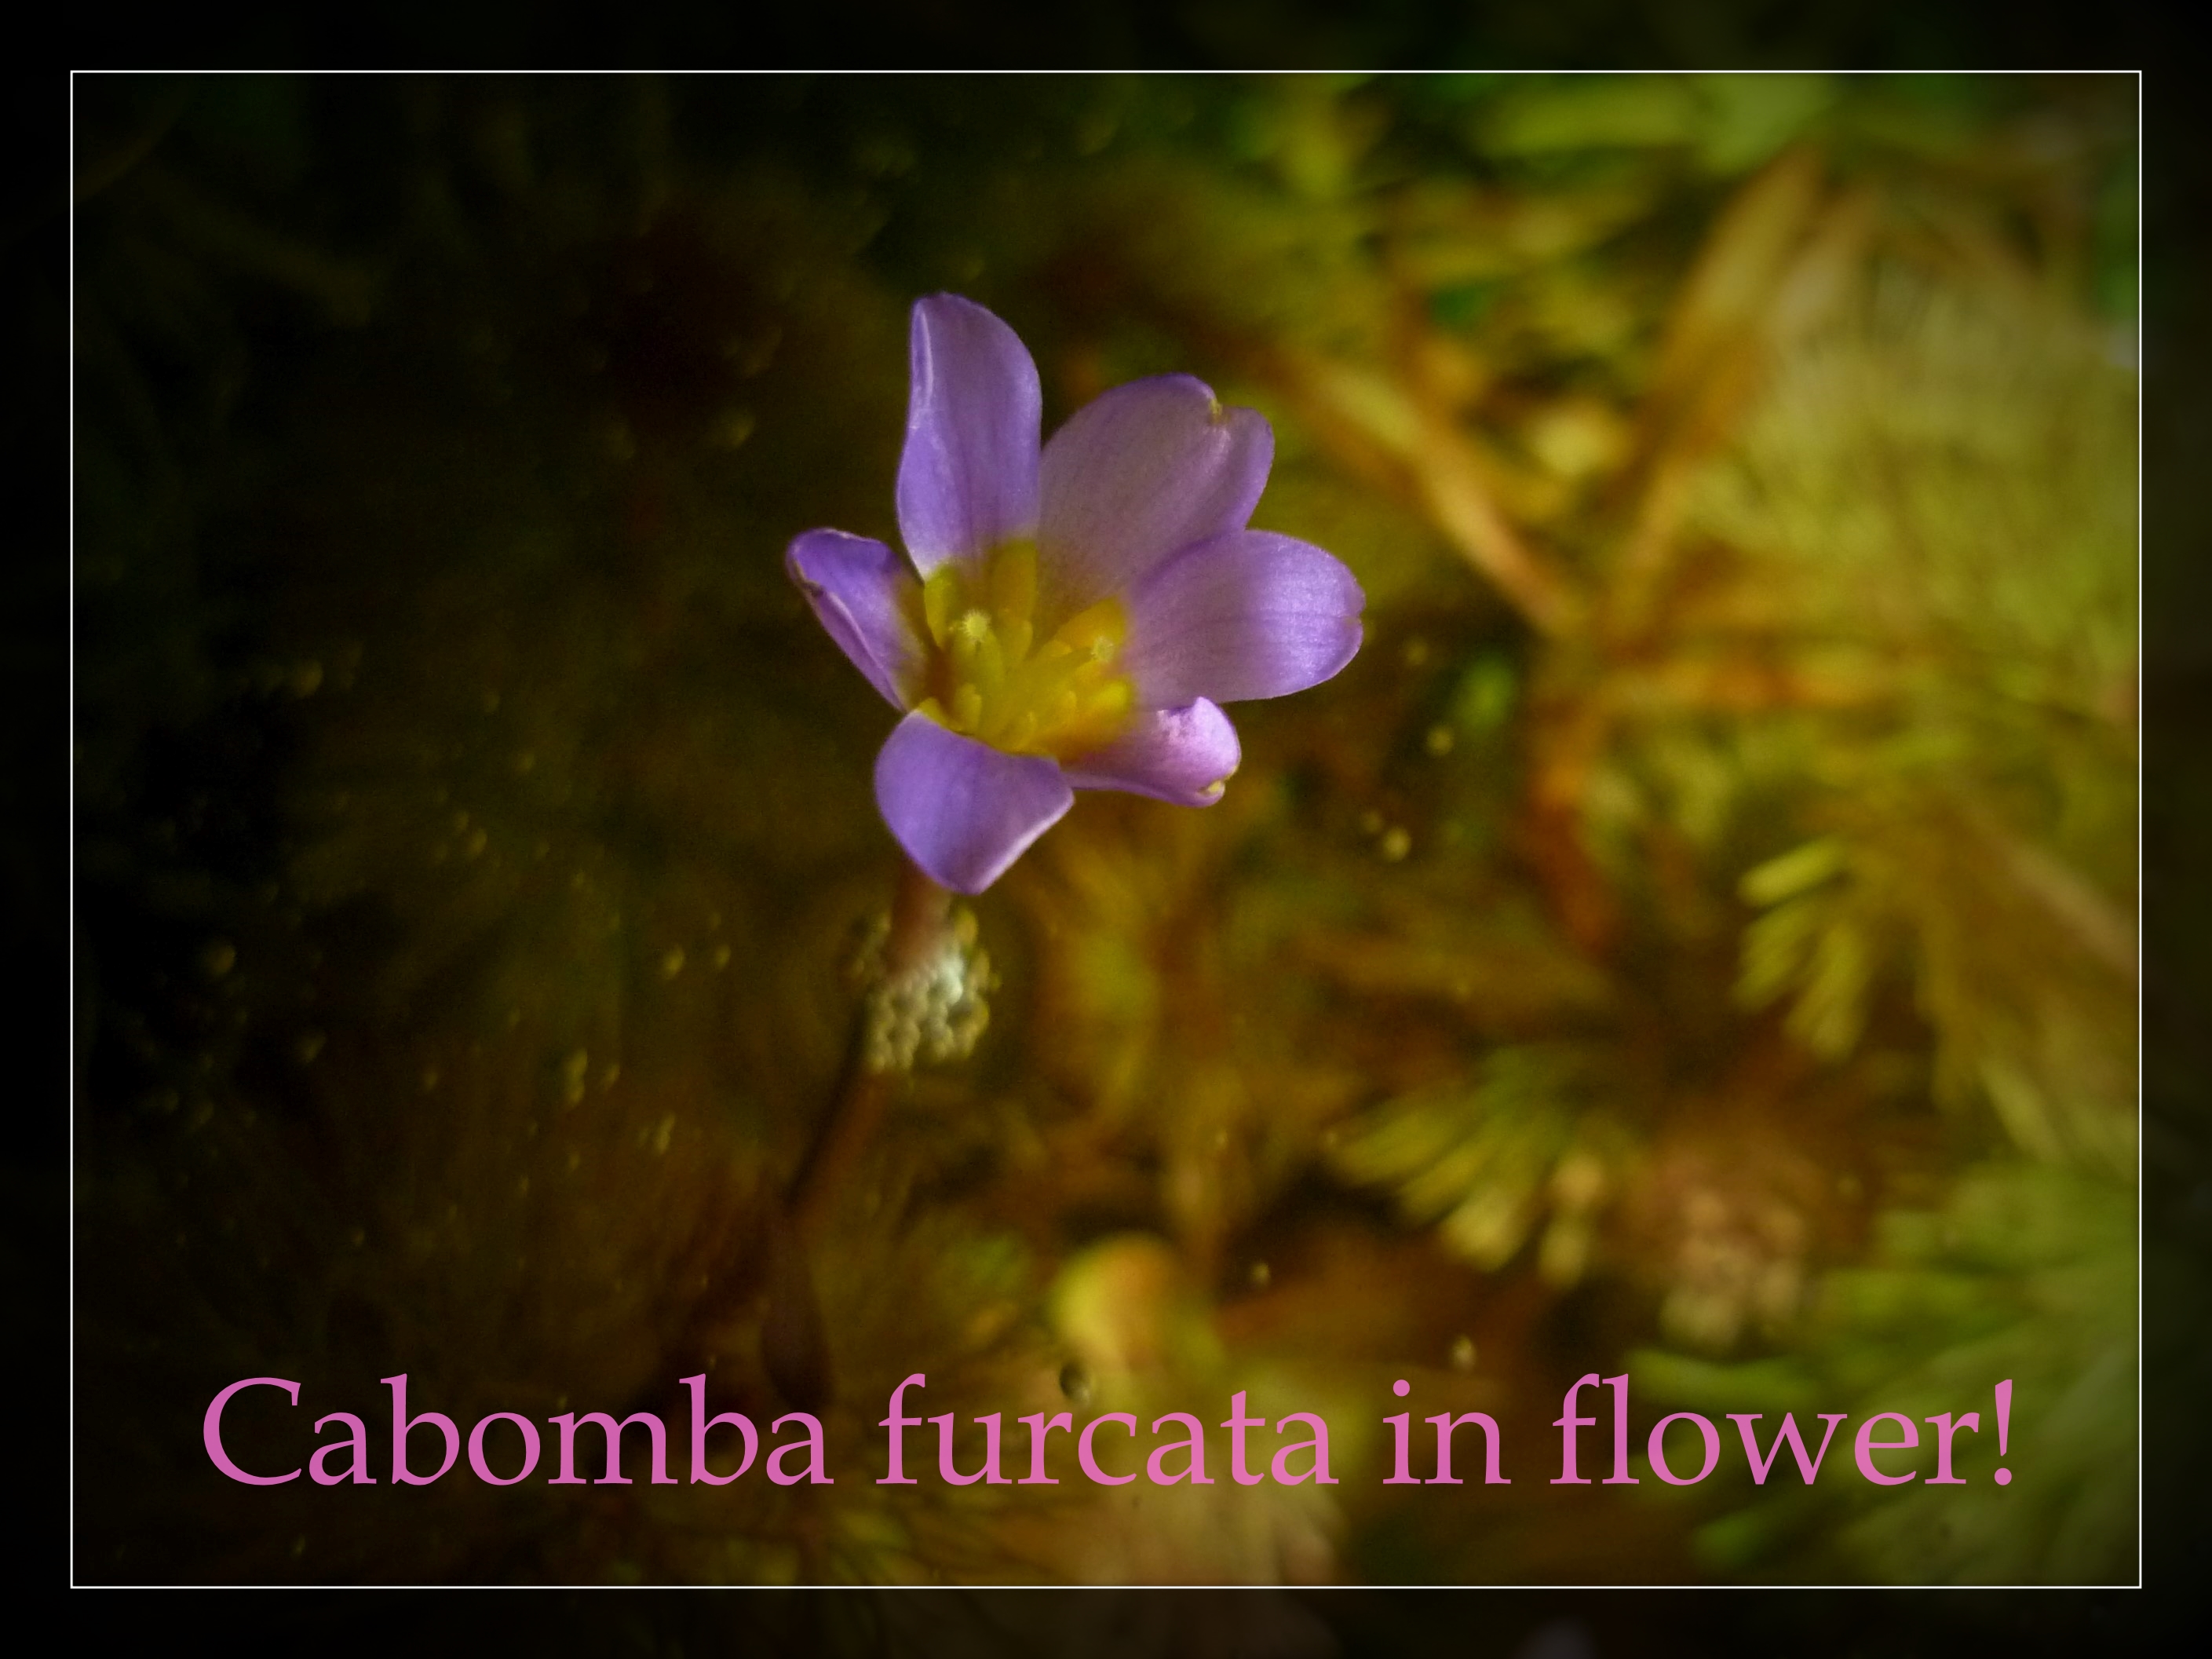 Cabomba furcata in flower!.jpg